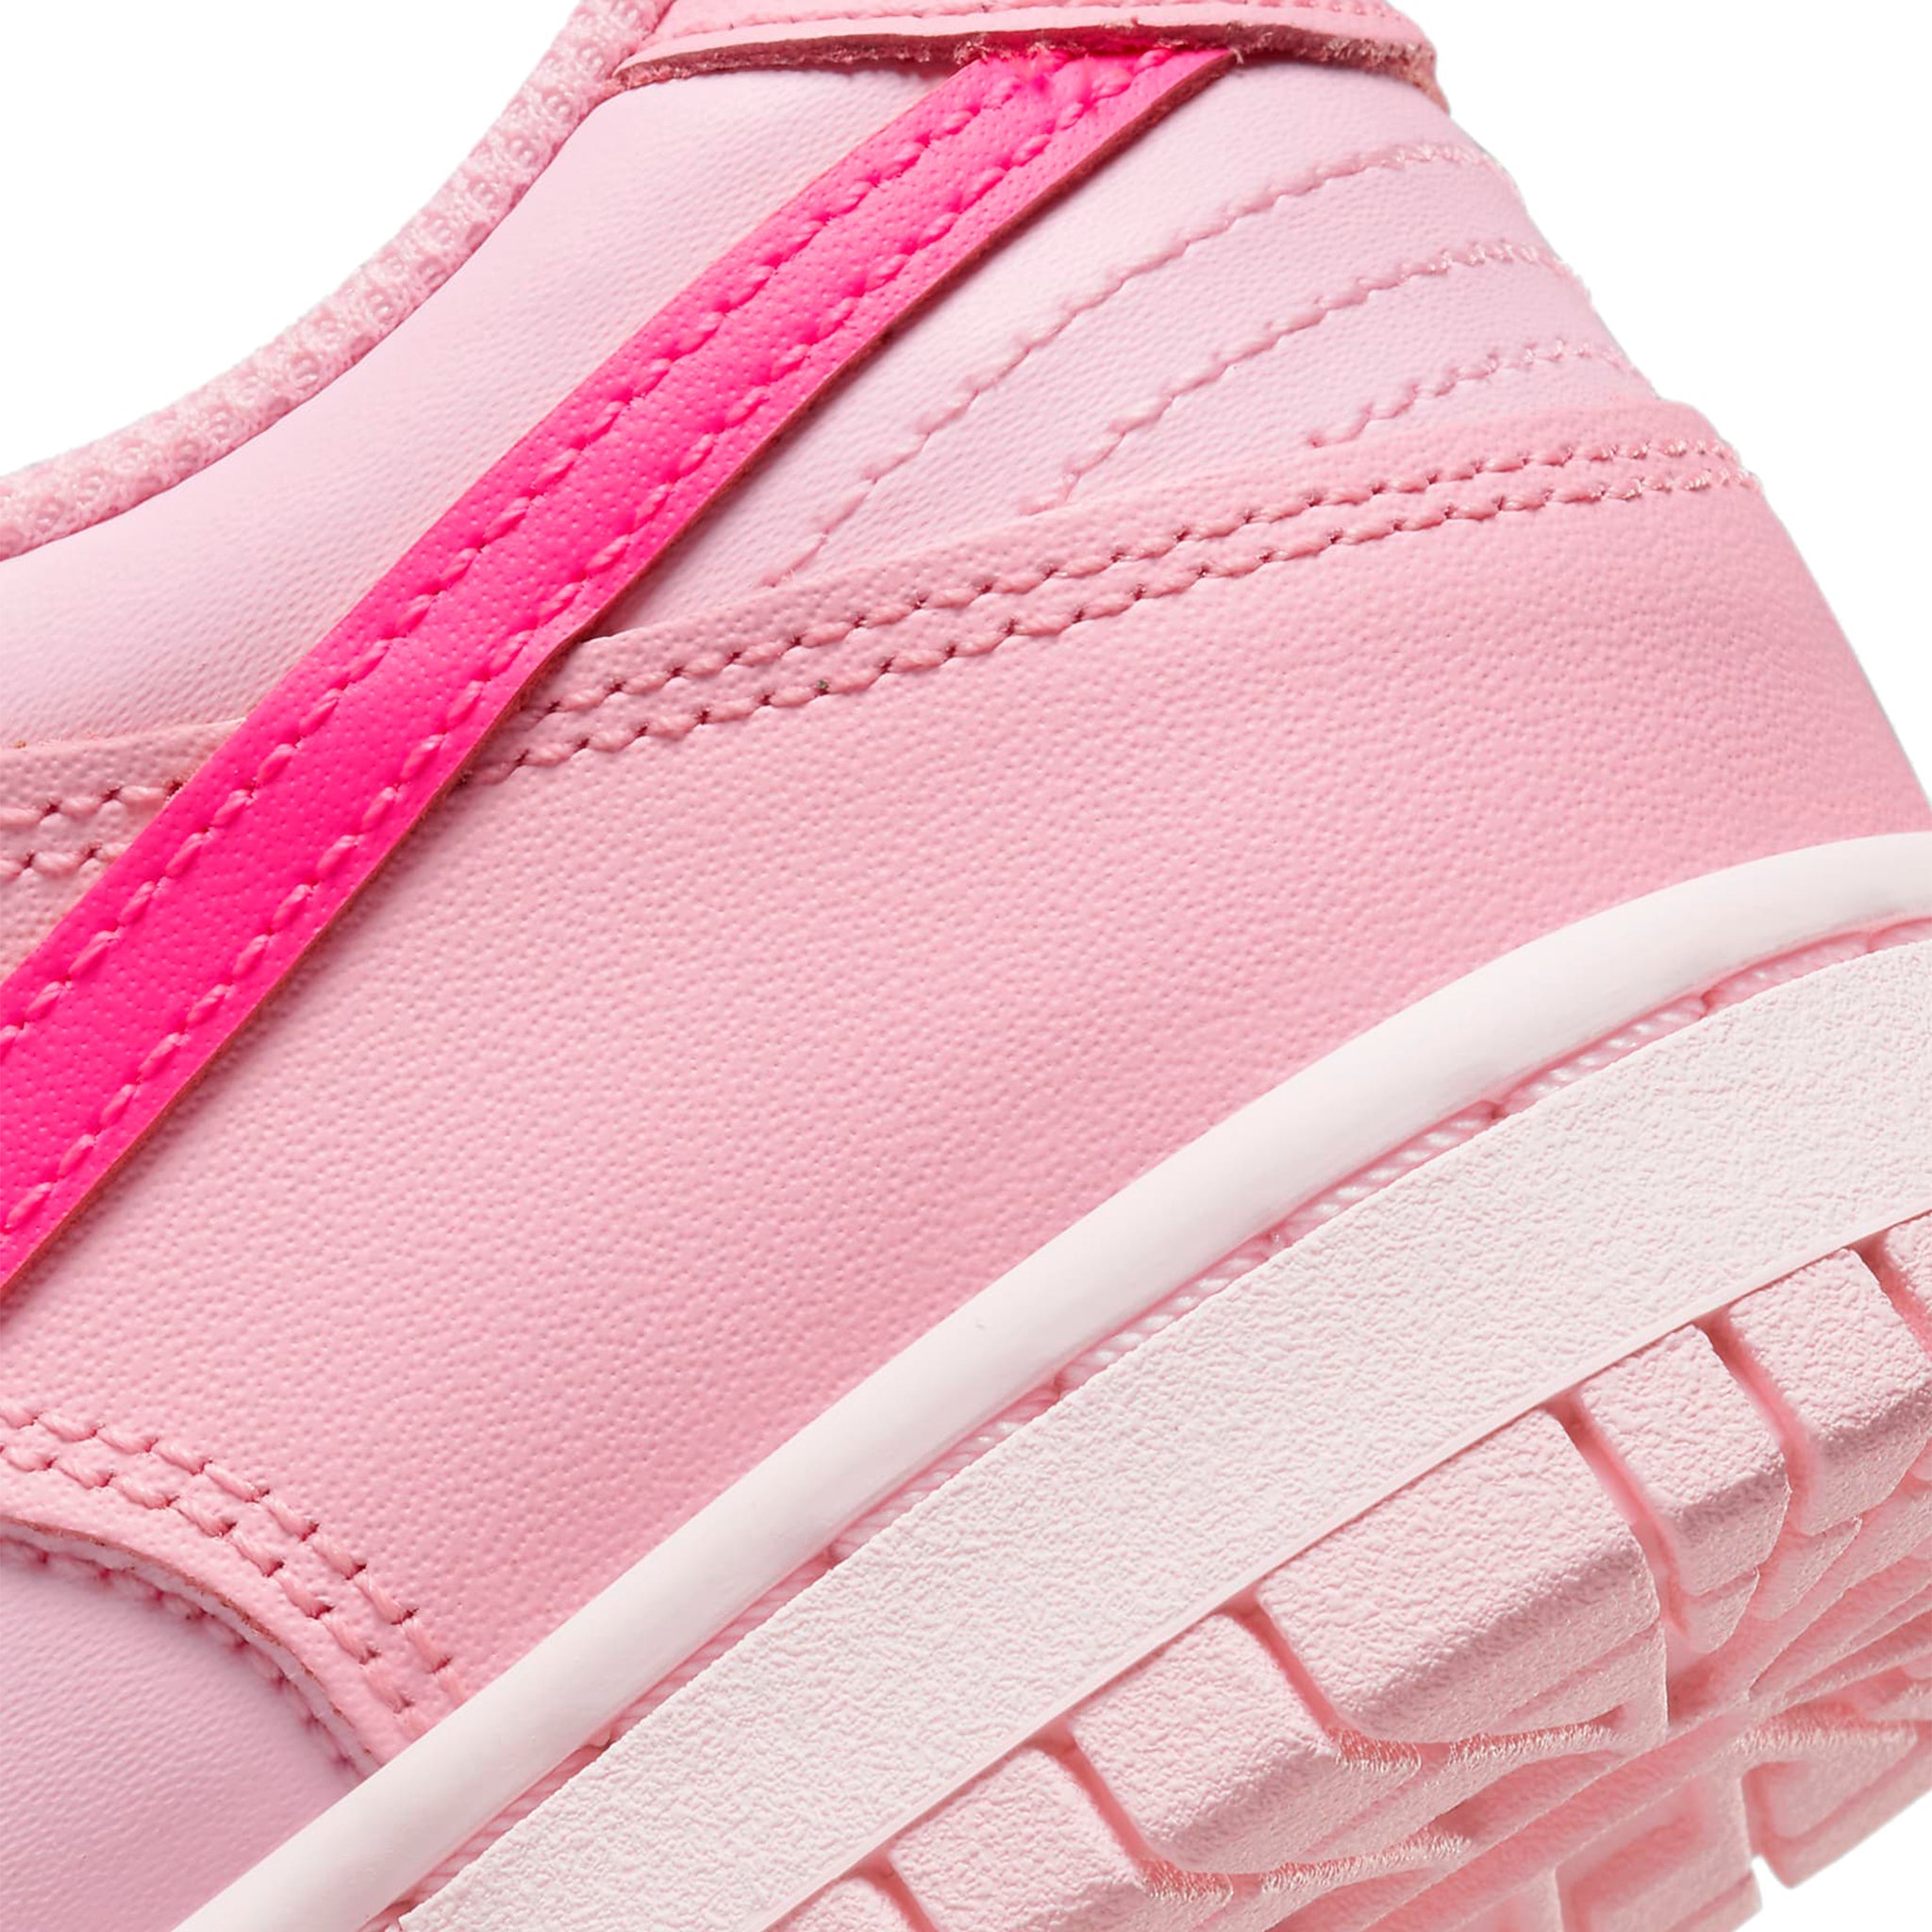 Nike Dunk Low 'Triple Pink' (GS) 